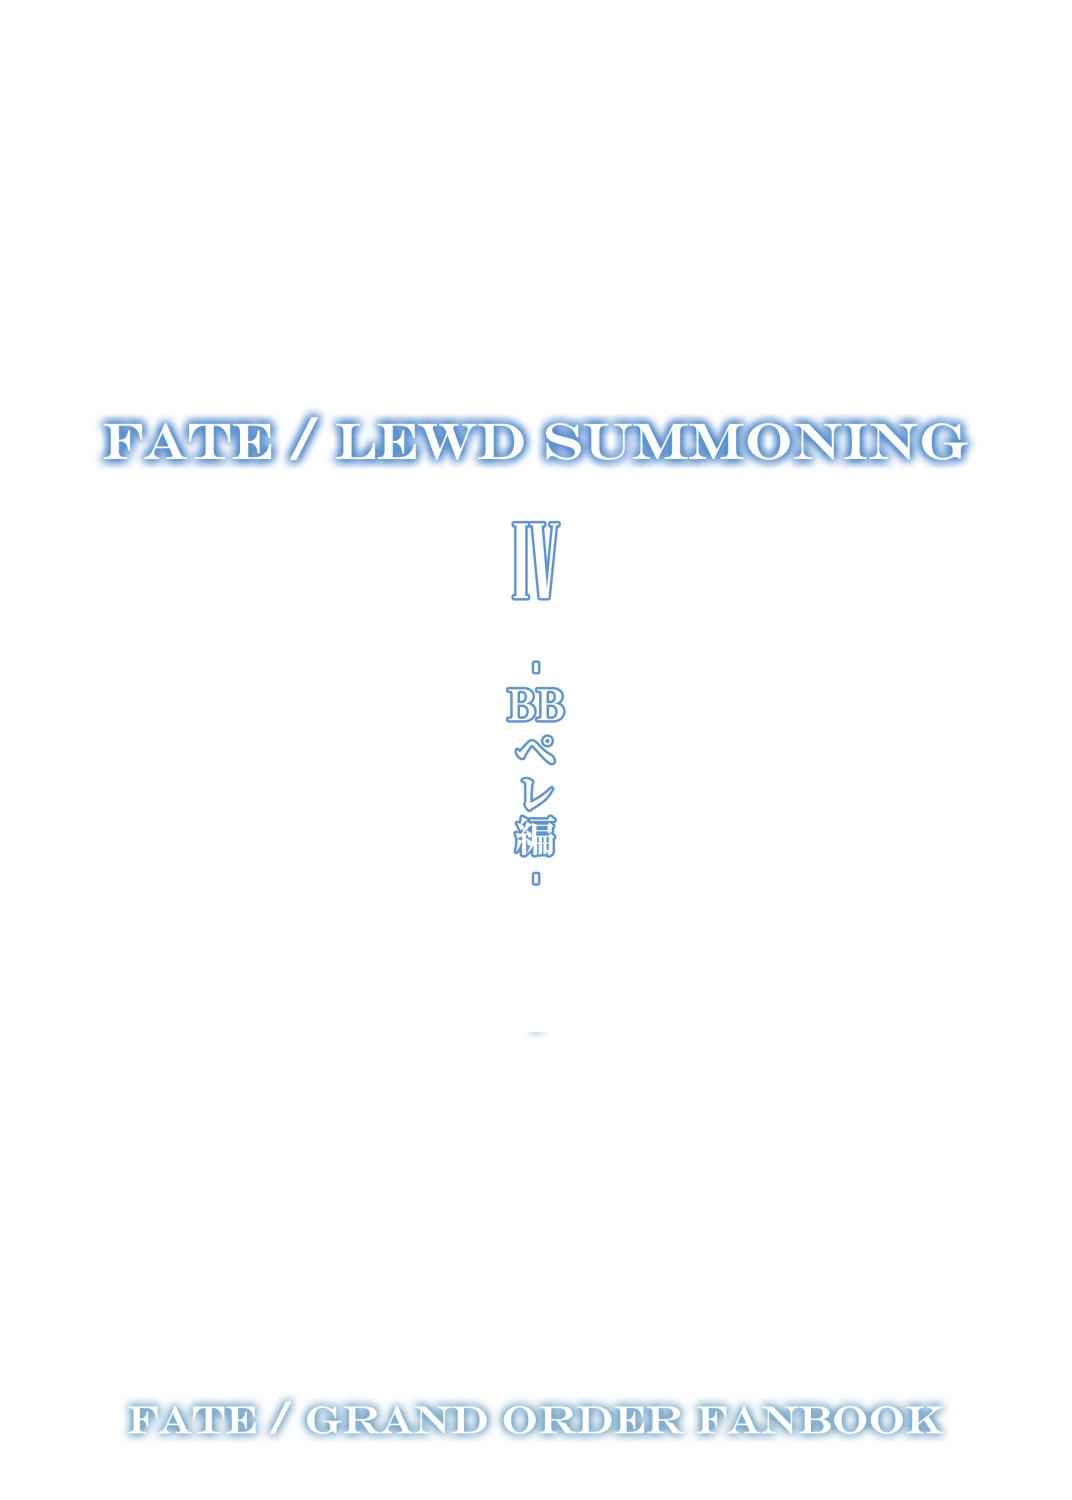 Fate/Lewd Summoning 4 20